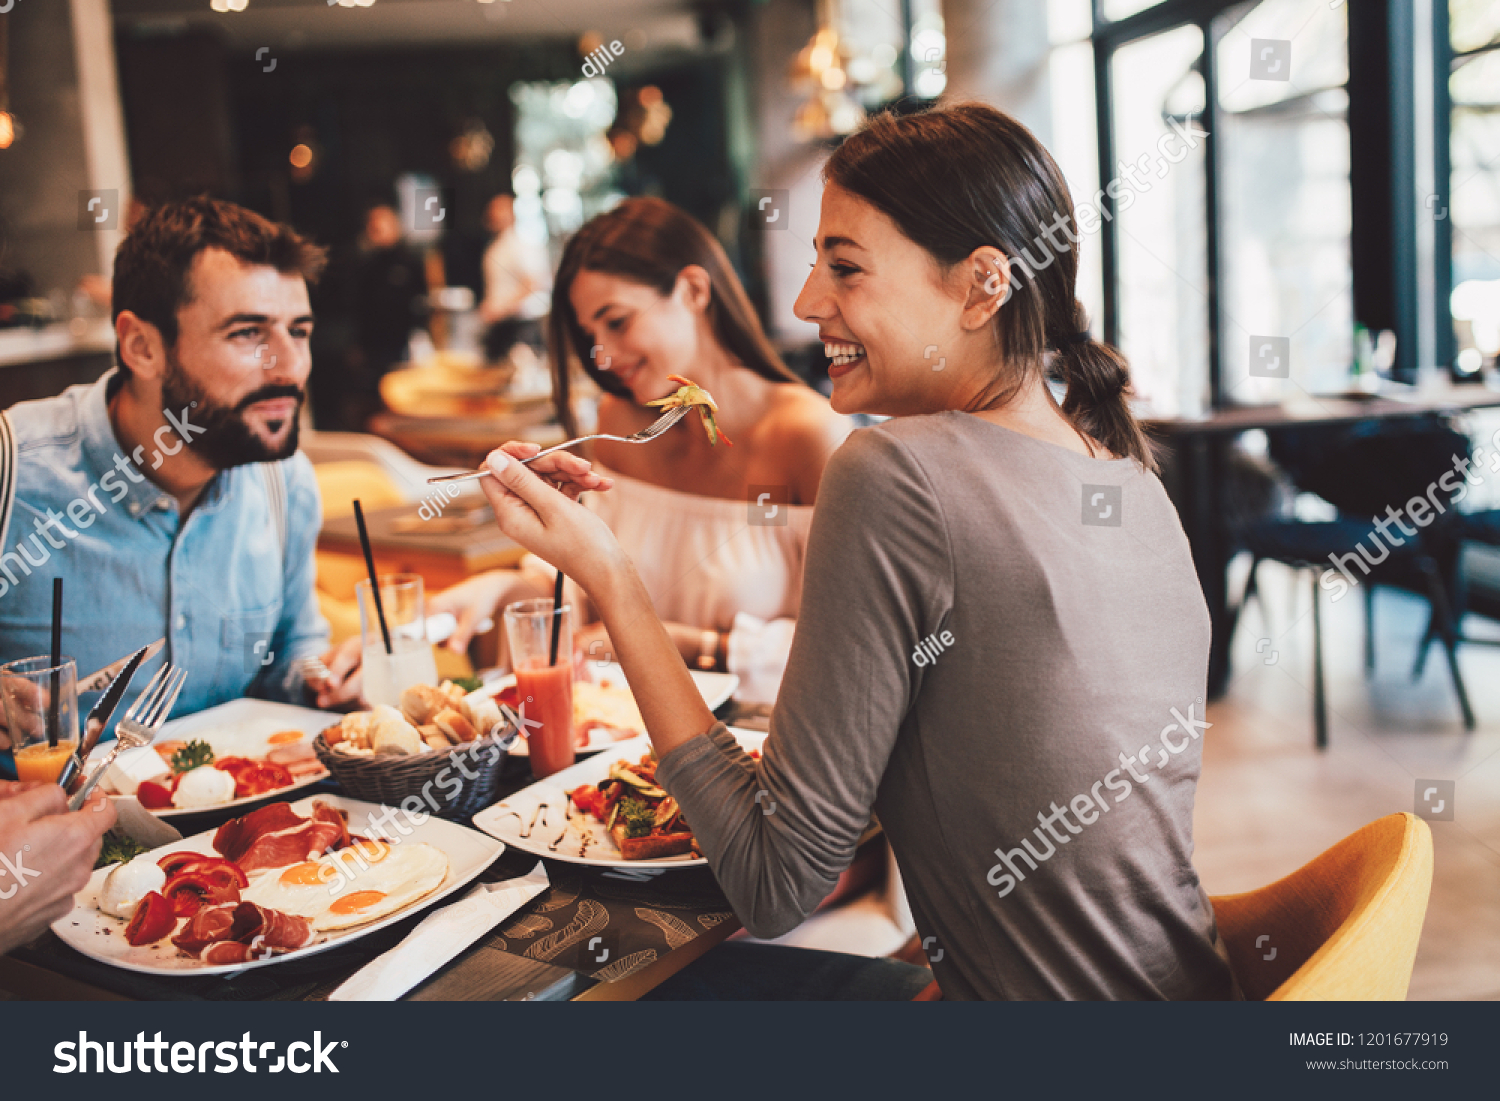 Group of Happy friends having breakfast in the restaurant #1201677919